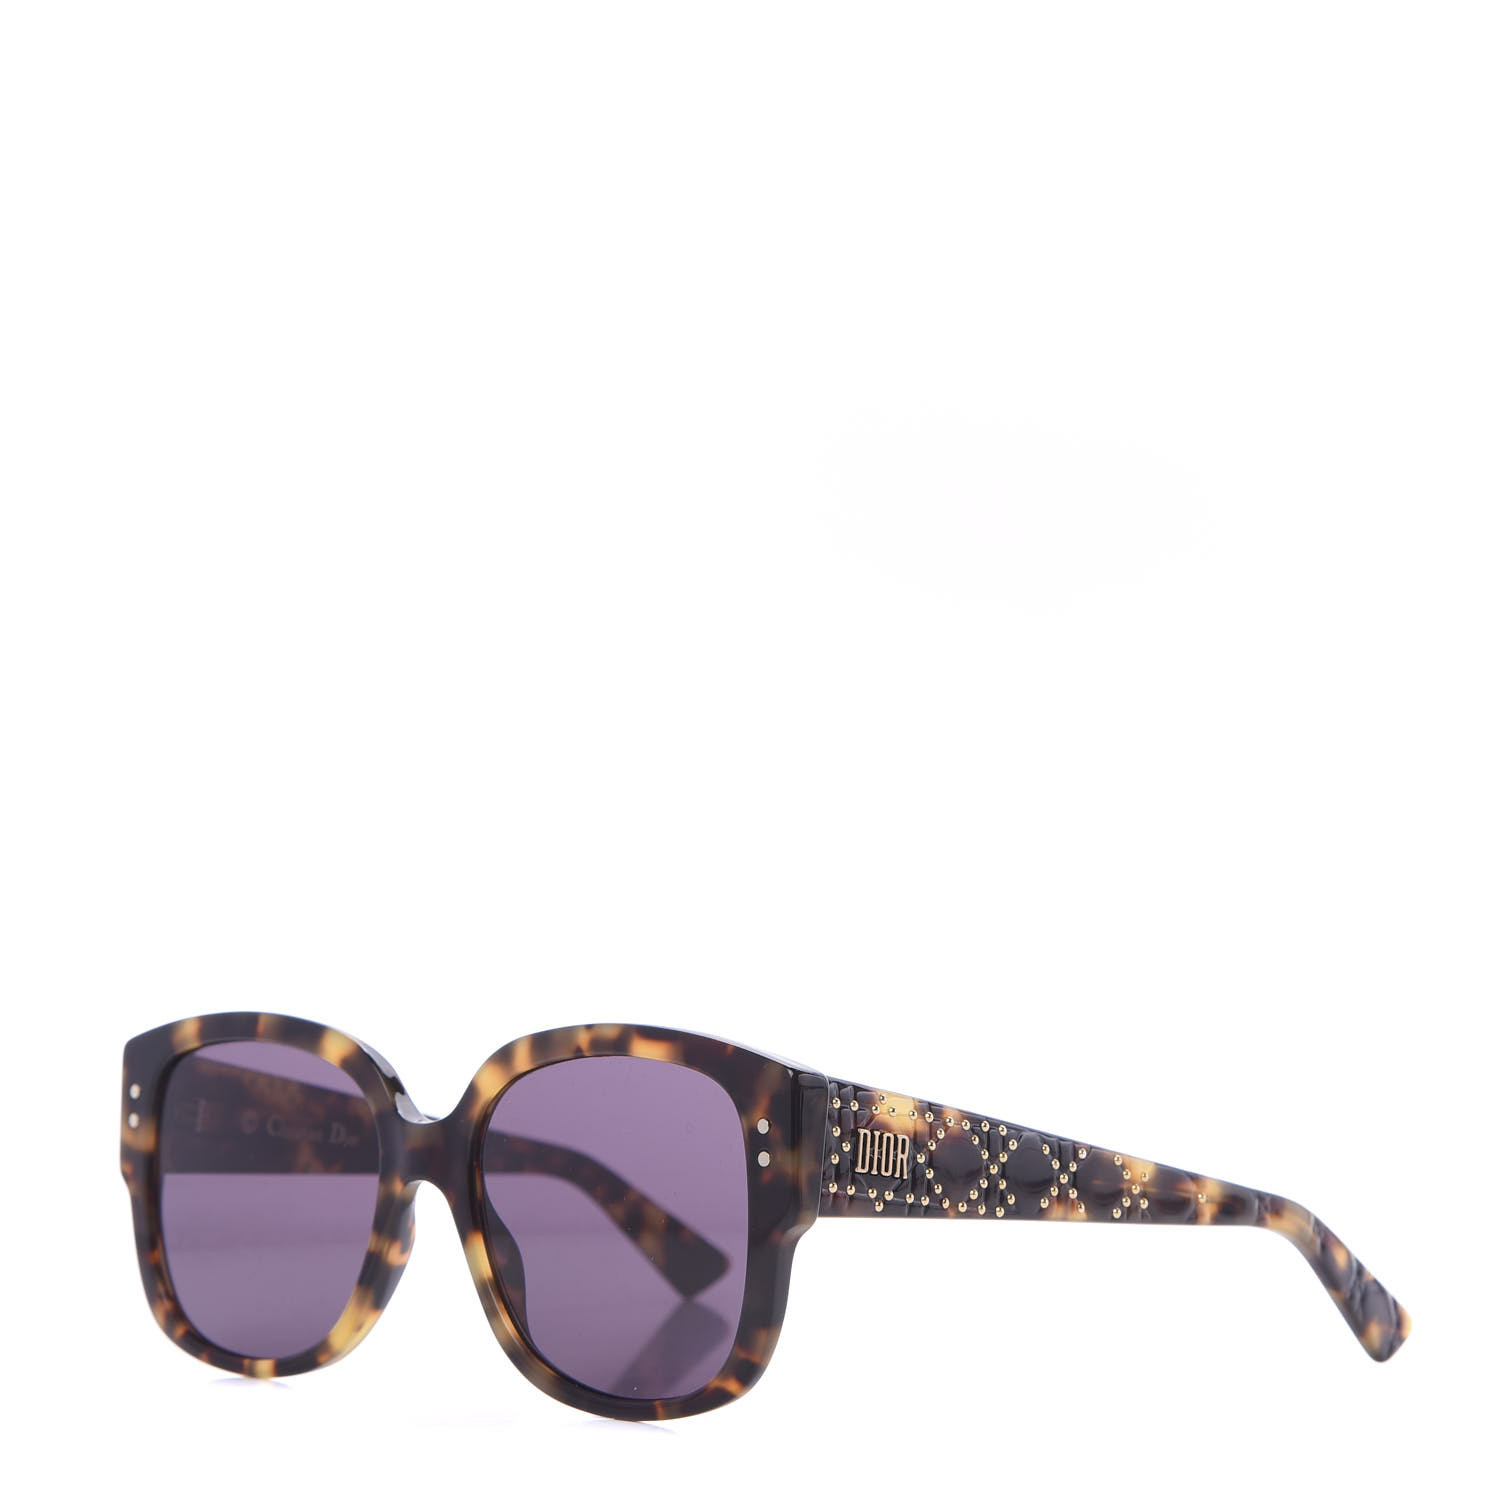 lady dior sunglasses